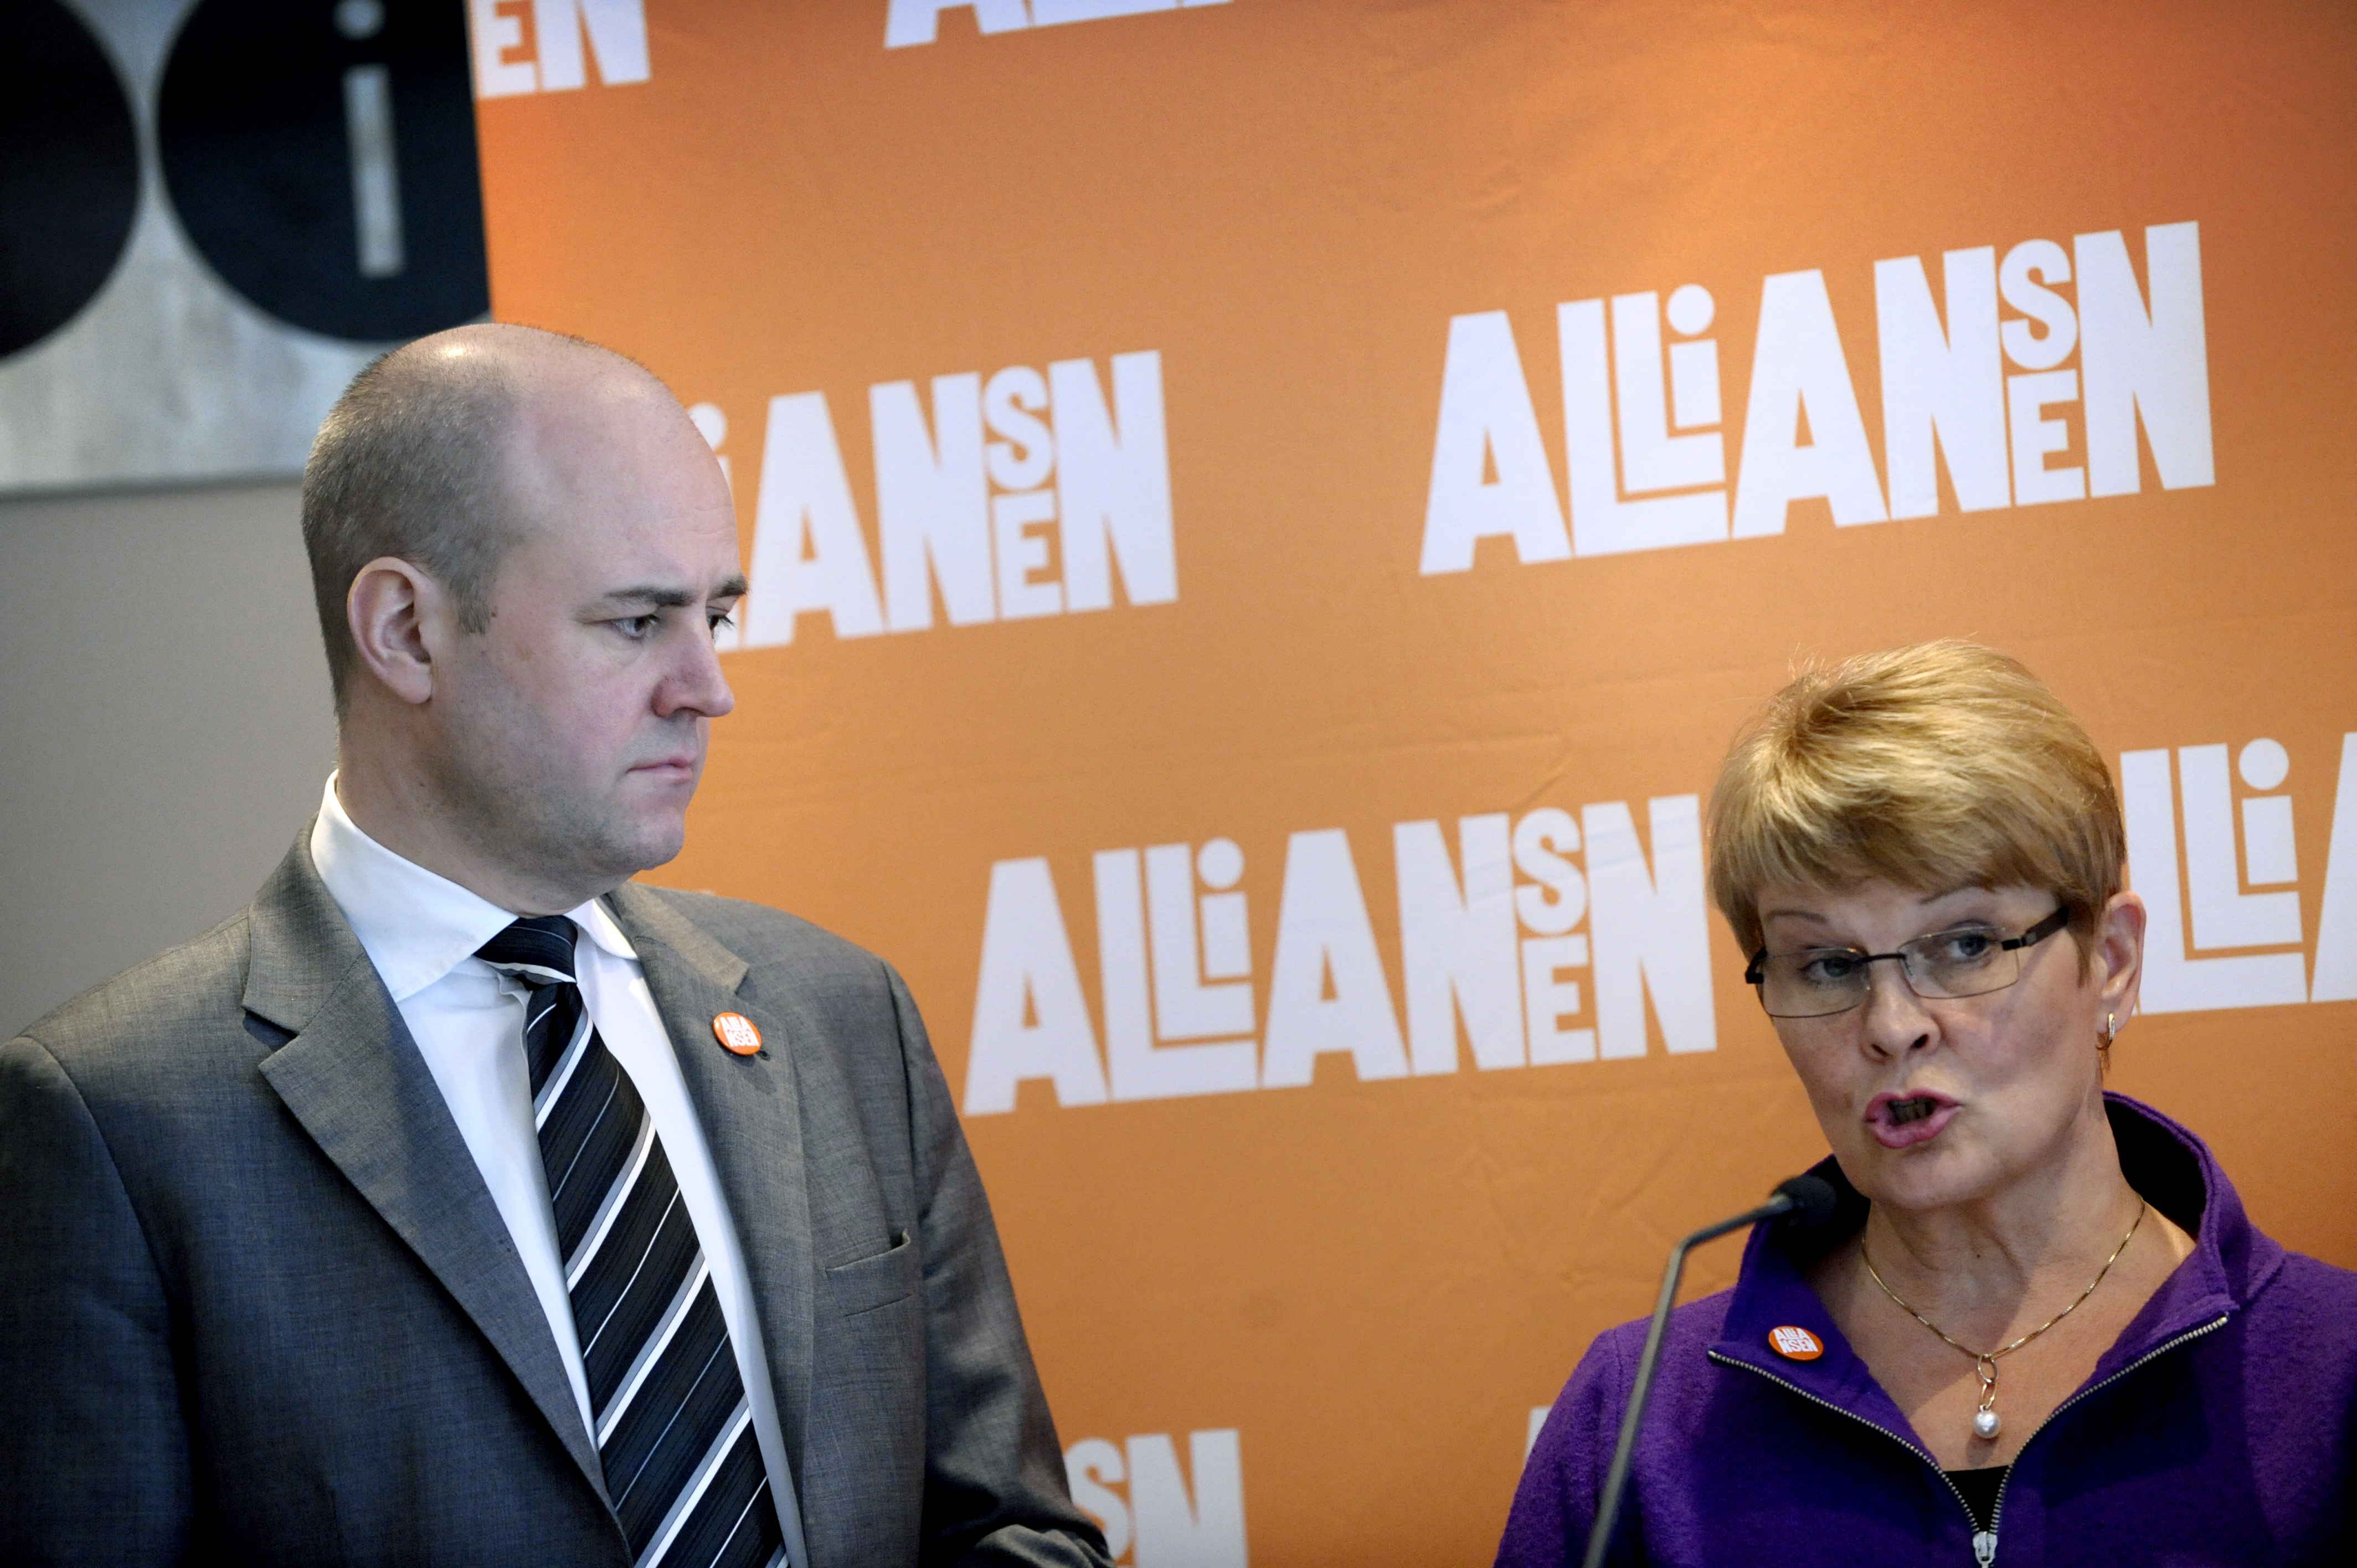 Riksdagsvalet 2010, Fredrik Reinfeldt, Centerpartiet, Moderaterna, Alliansen, Maud Olofsson, Regeringen